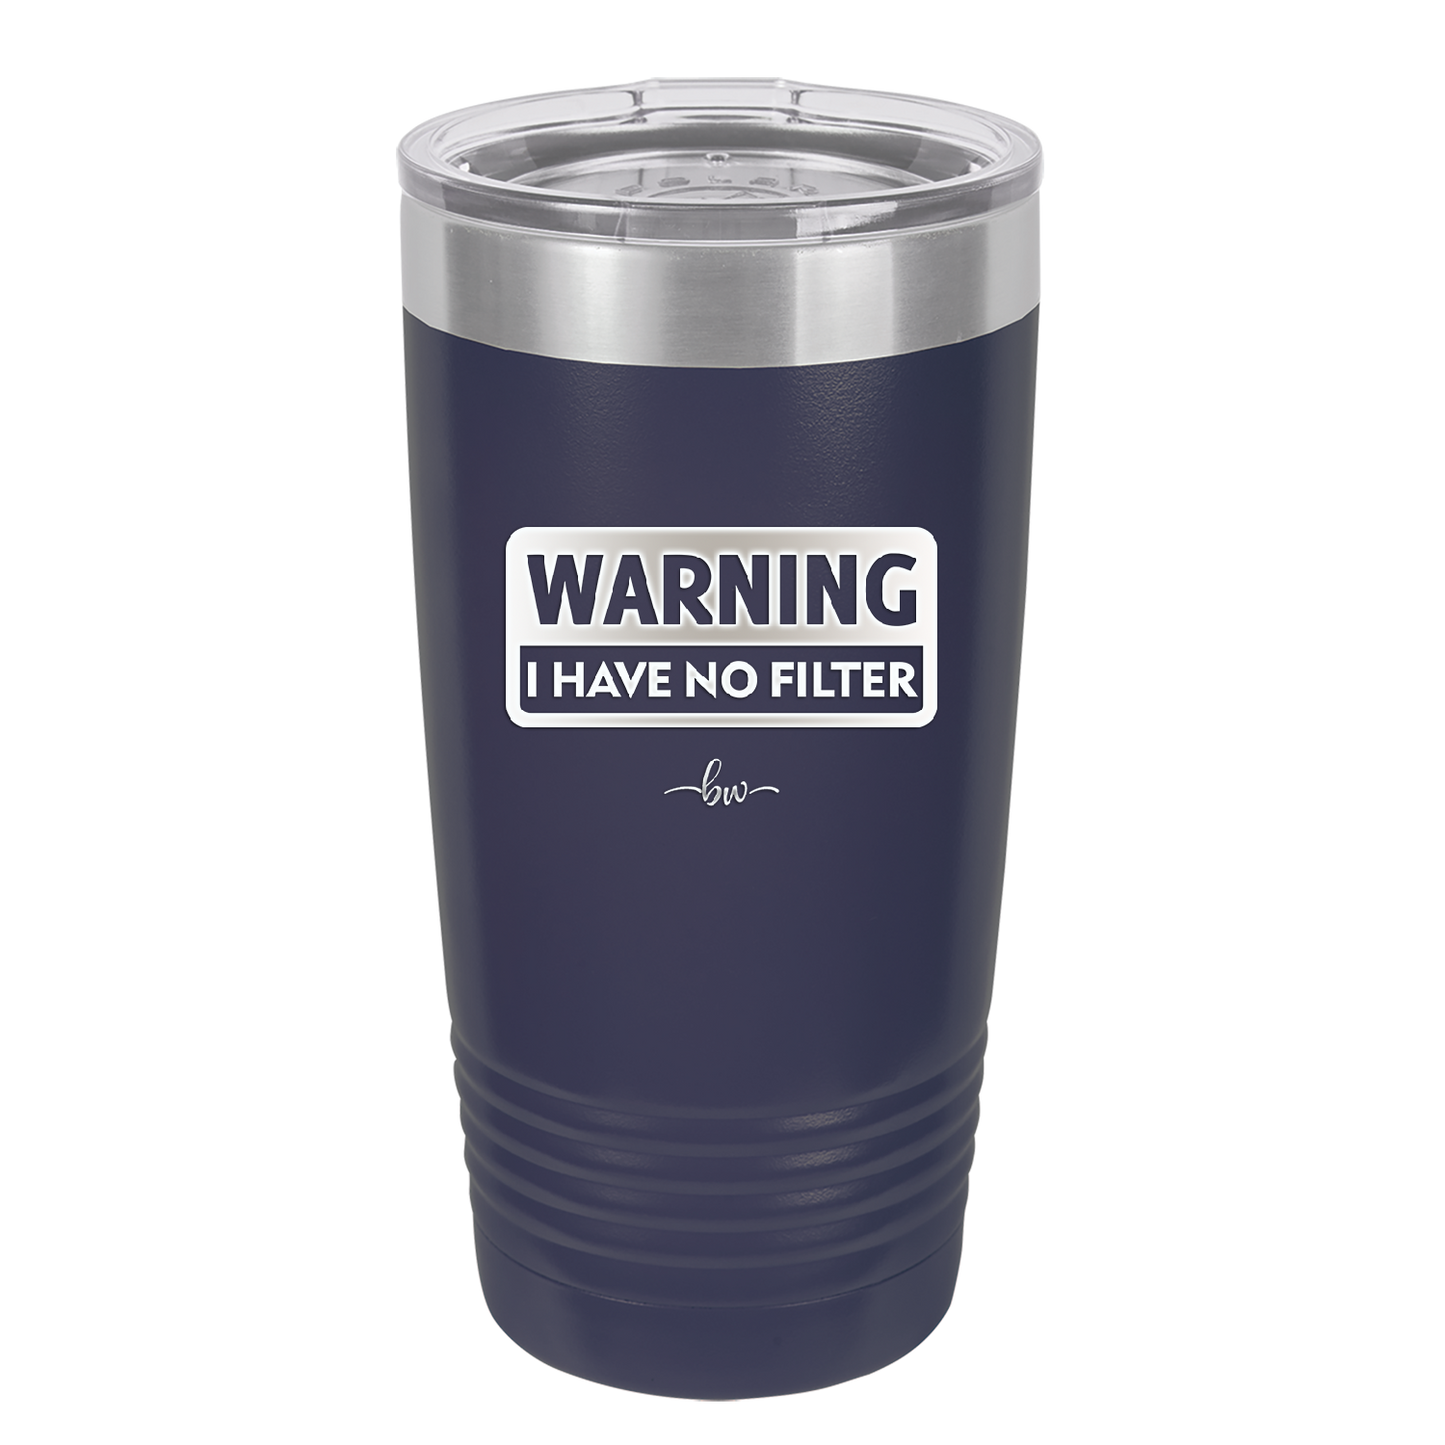 Warning I Have No Filter - Laser Engraved Stainless Steel Drinkware - 2317 -